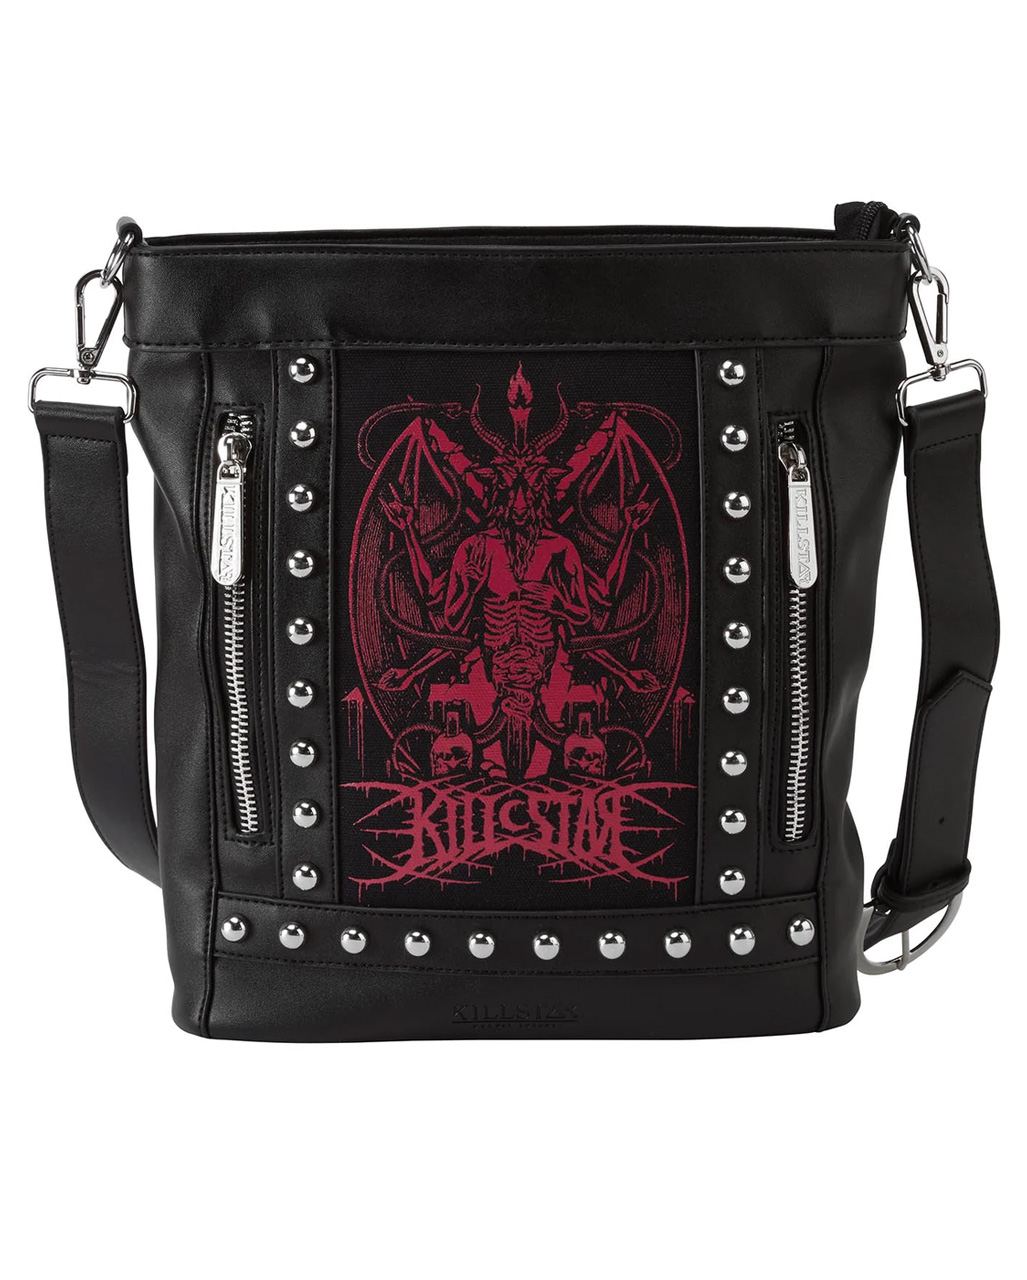 KILLSTAR Rawk Me Handbag for Gothic Fans | Horror-Shop.com